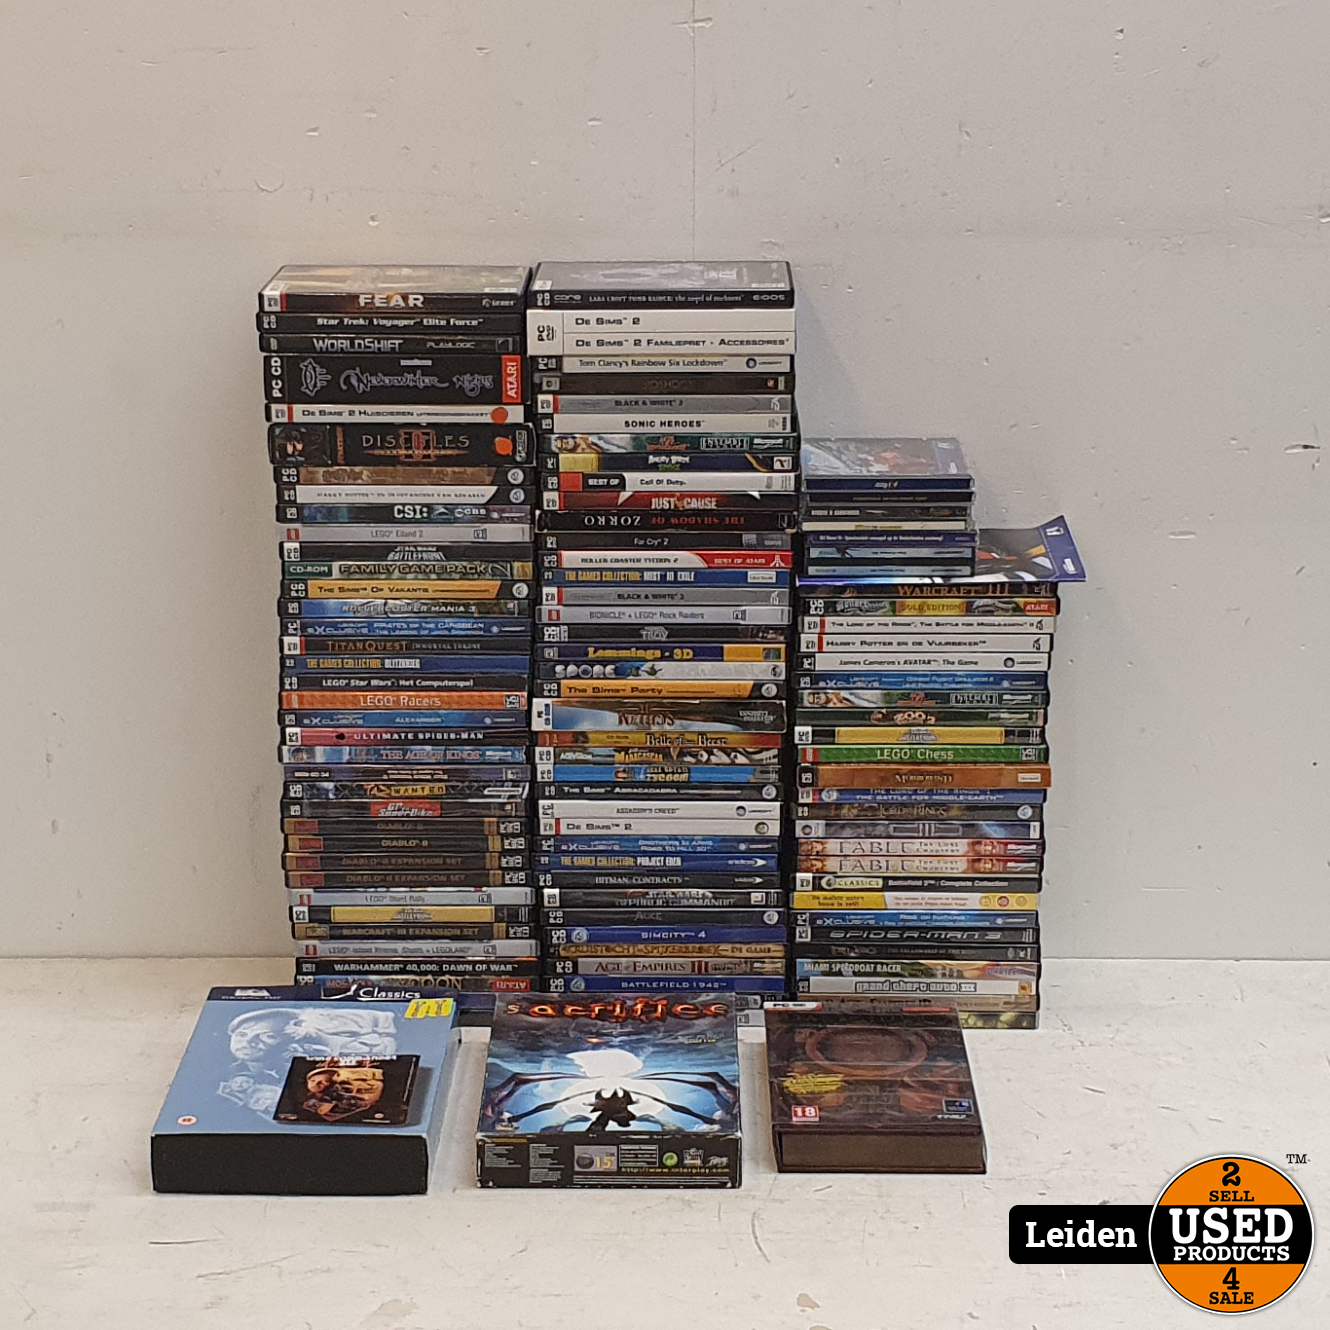 dik gevogelte Fervent Diverse PC Games (+/- 100 stuks) stuk prijs €5,- - Used Products Leiden